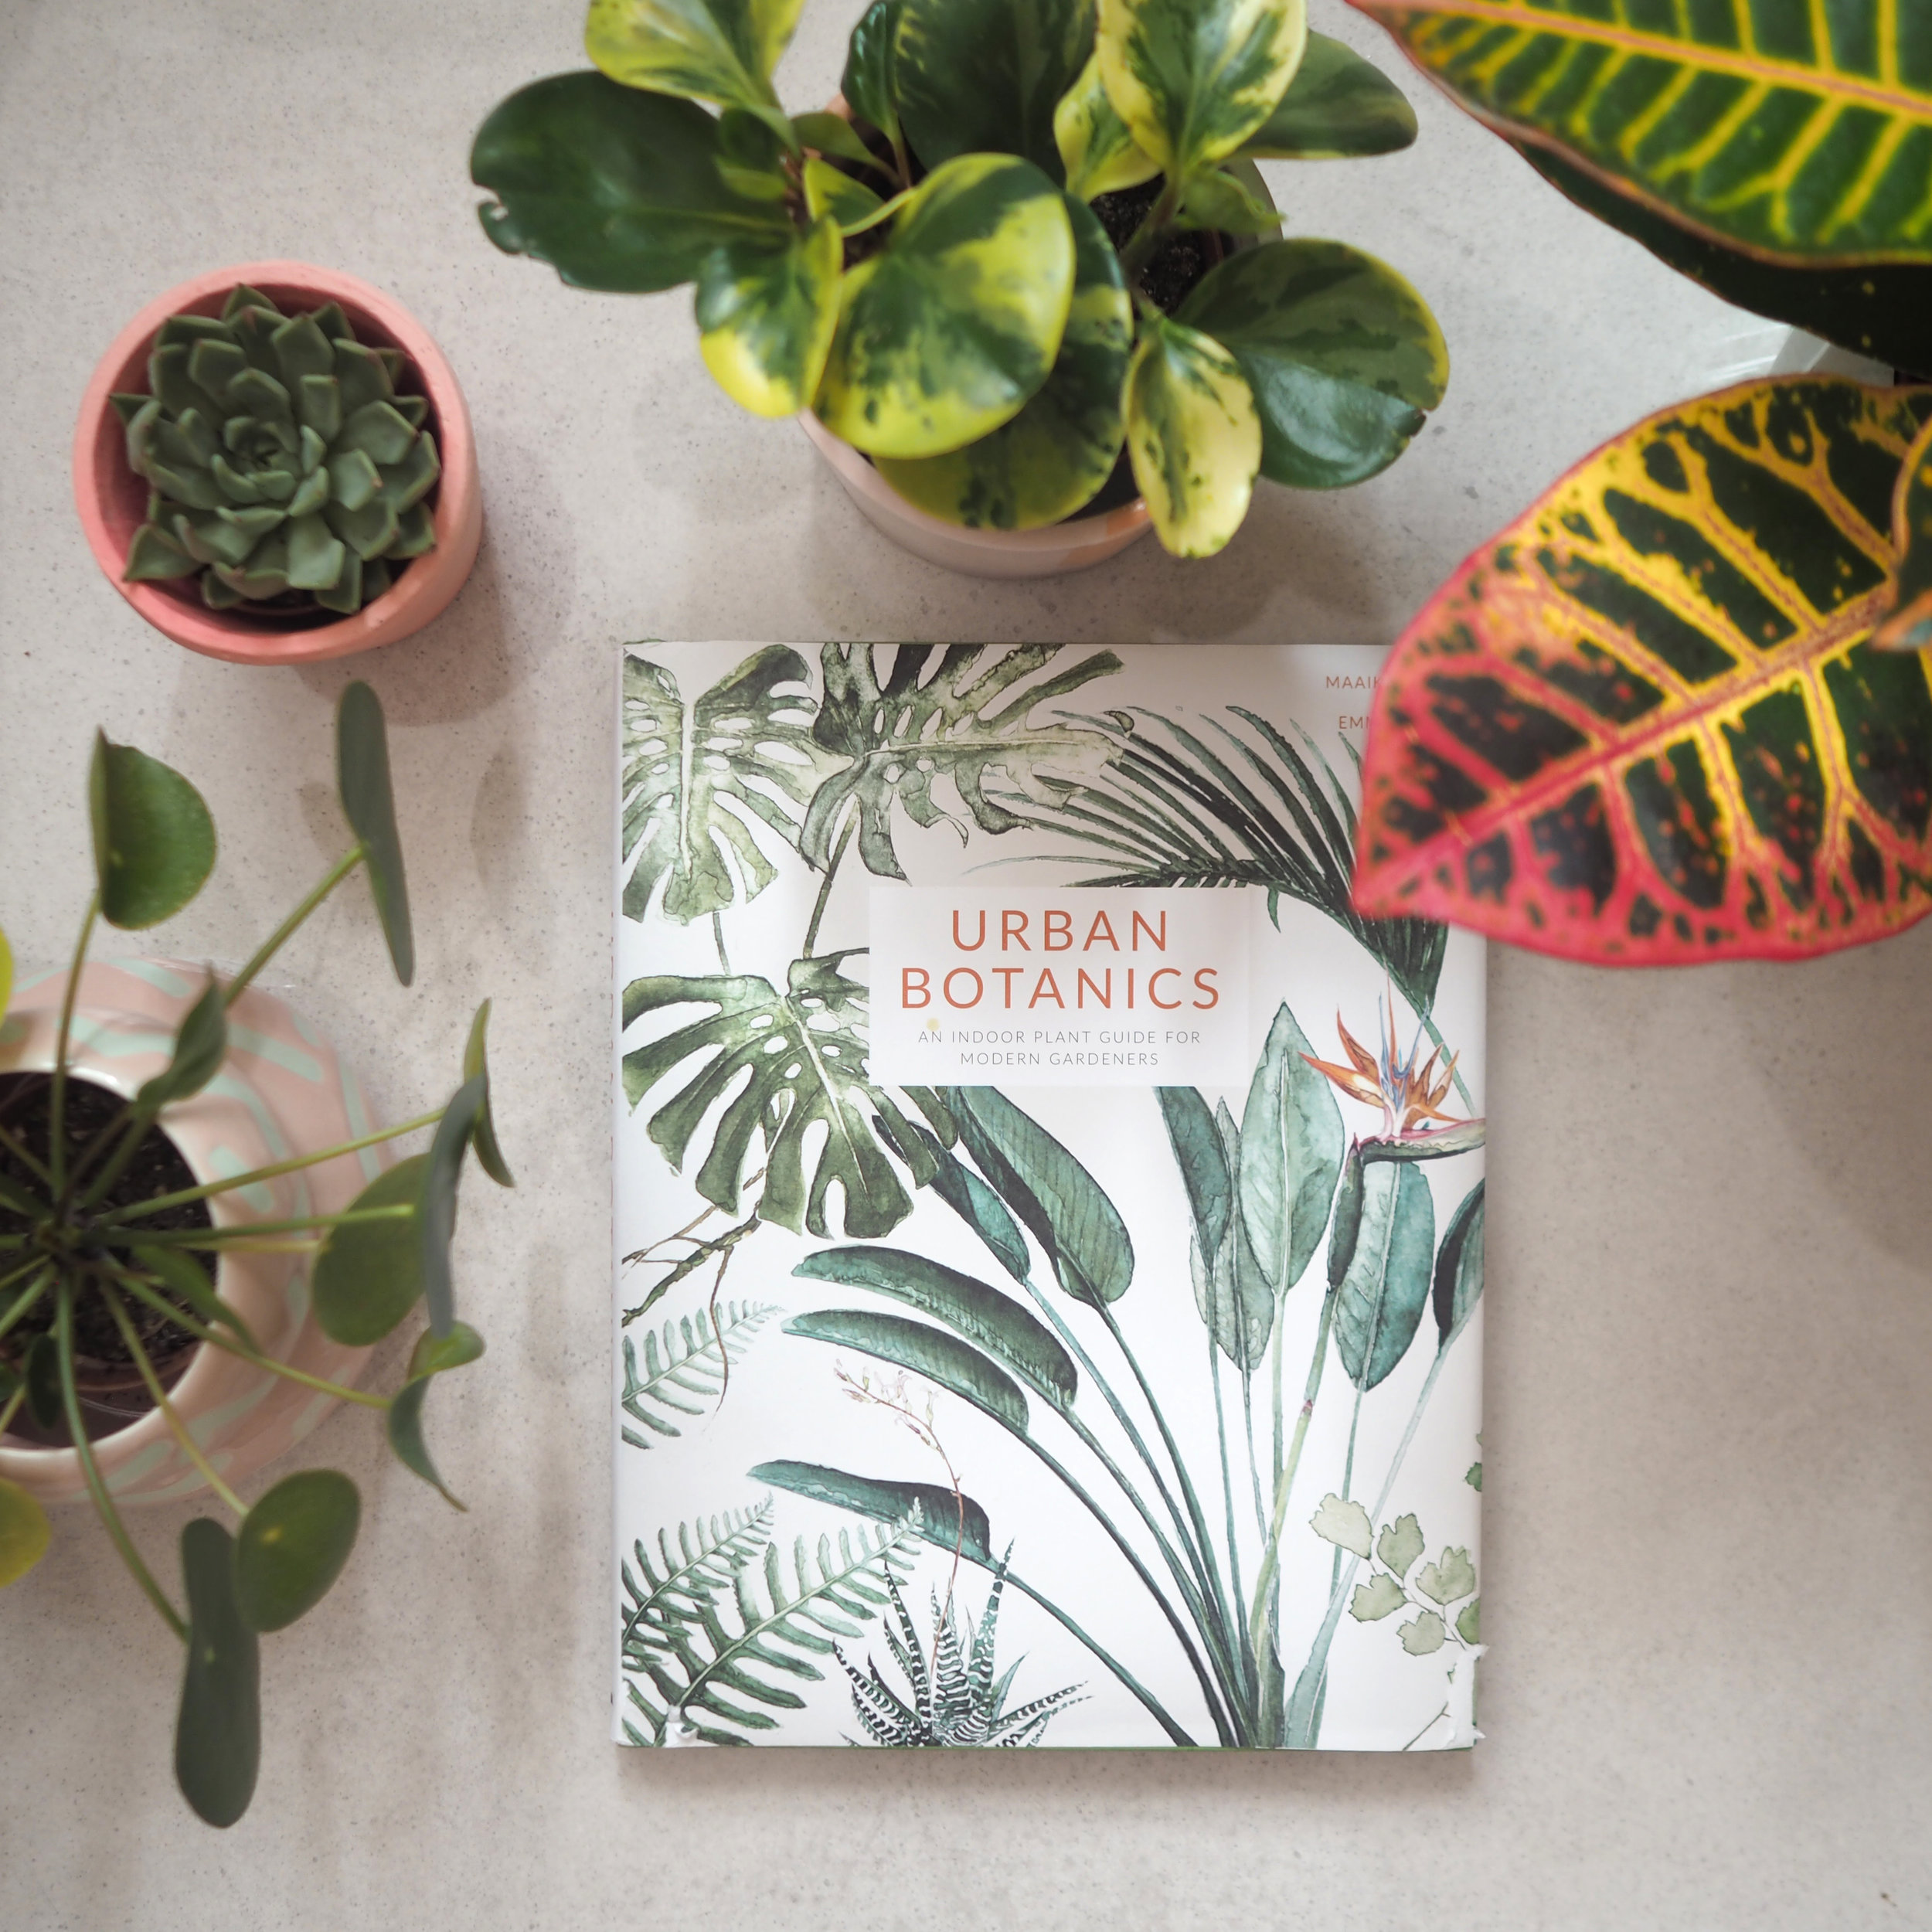 Urban Botanics by Maaike Koster and Emma Sibley